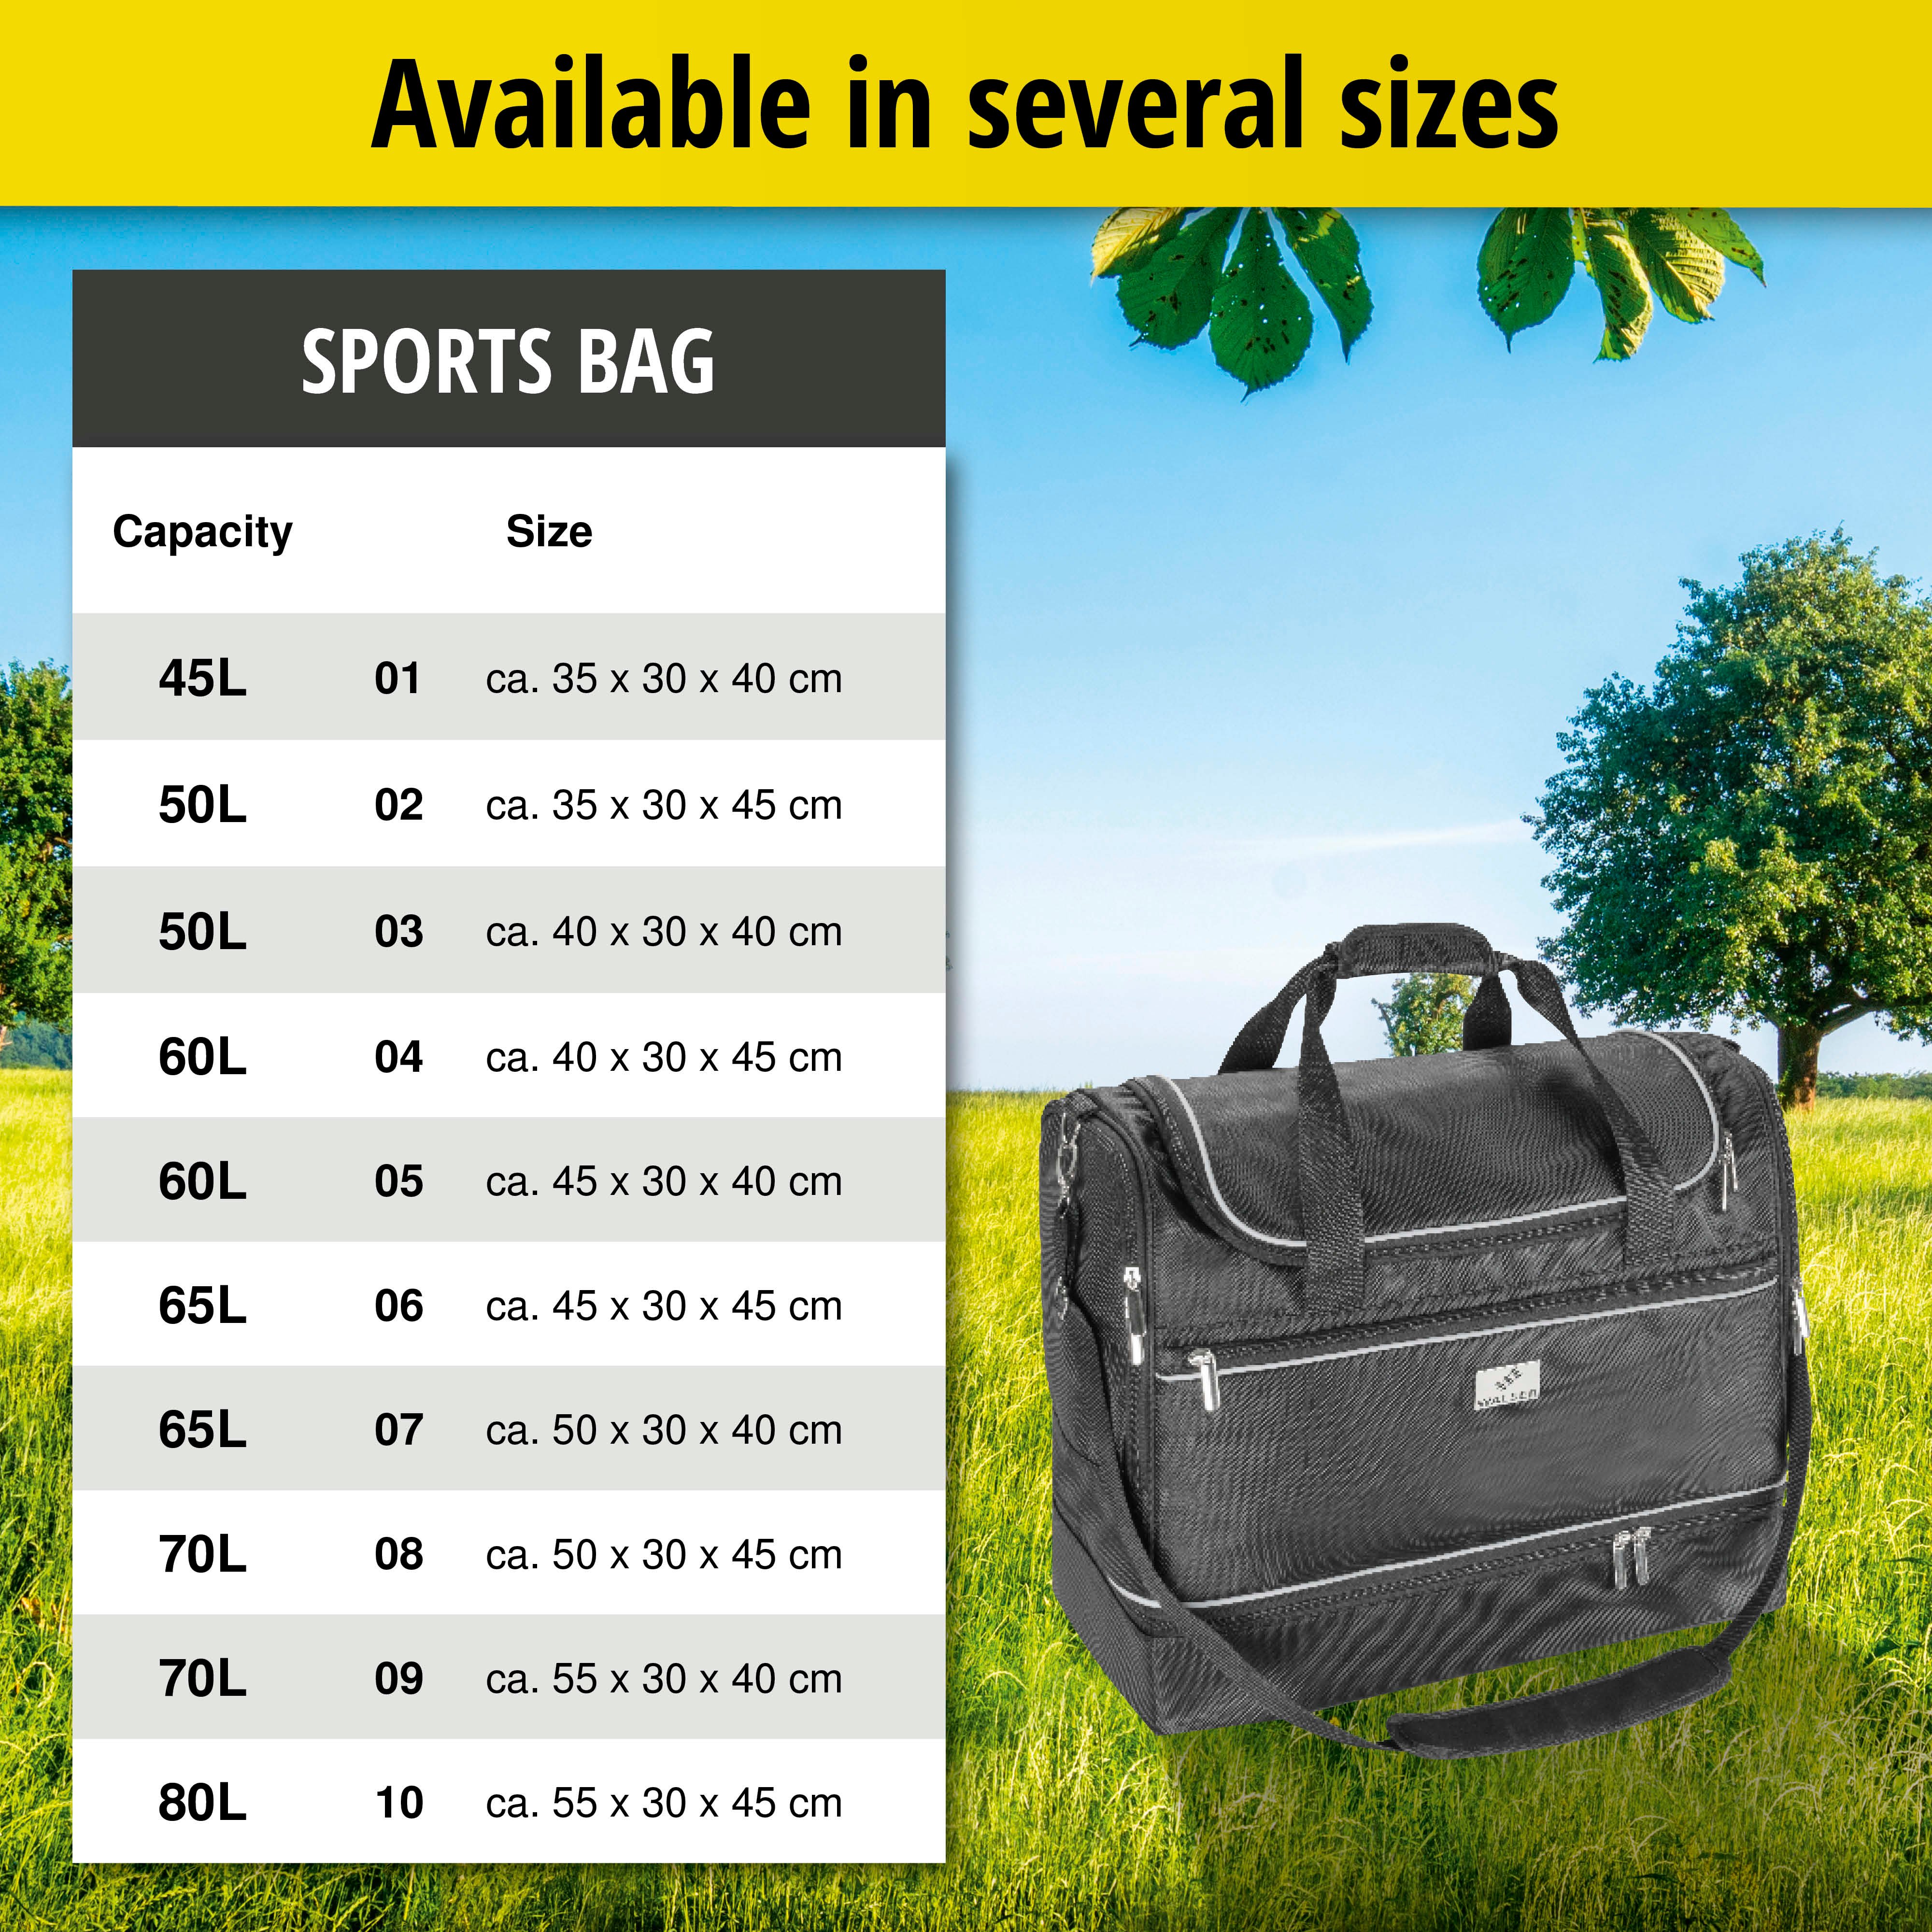 Carbags sports bag 65L - 45x30x45cm